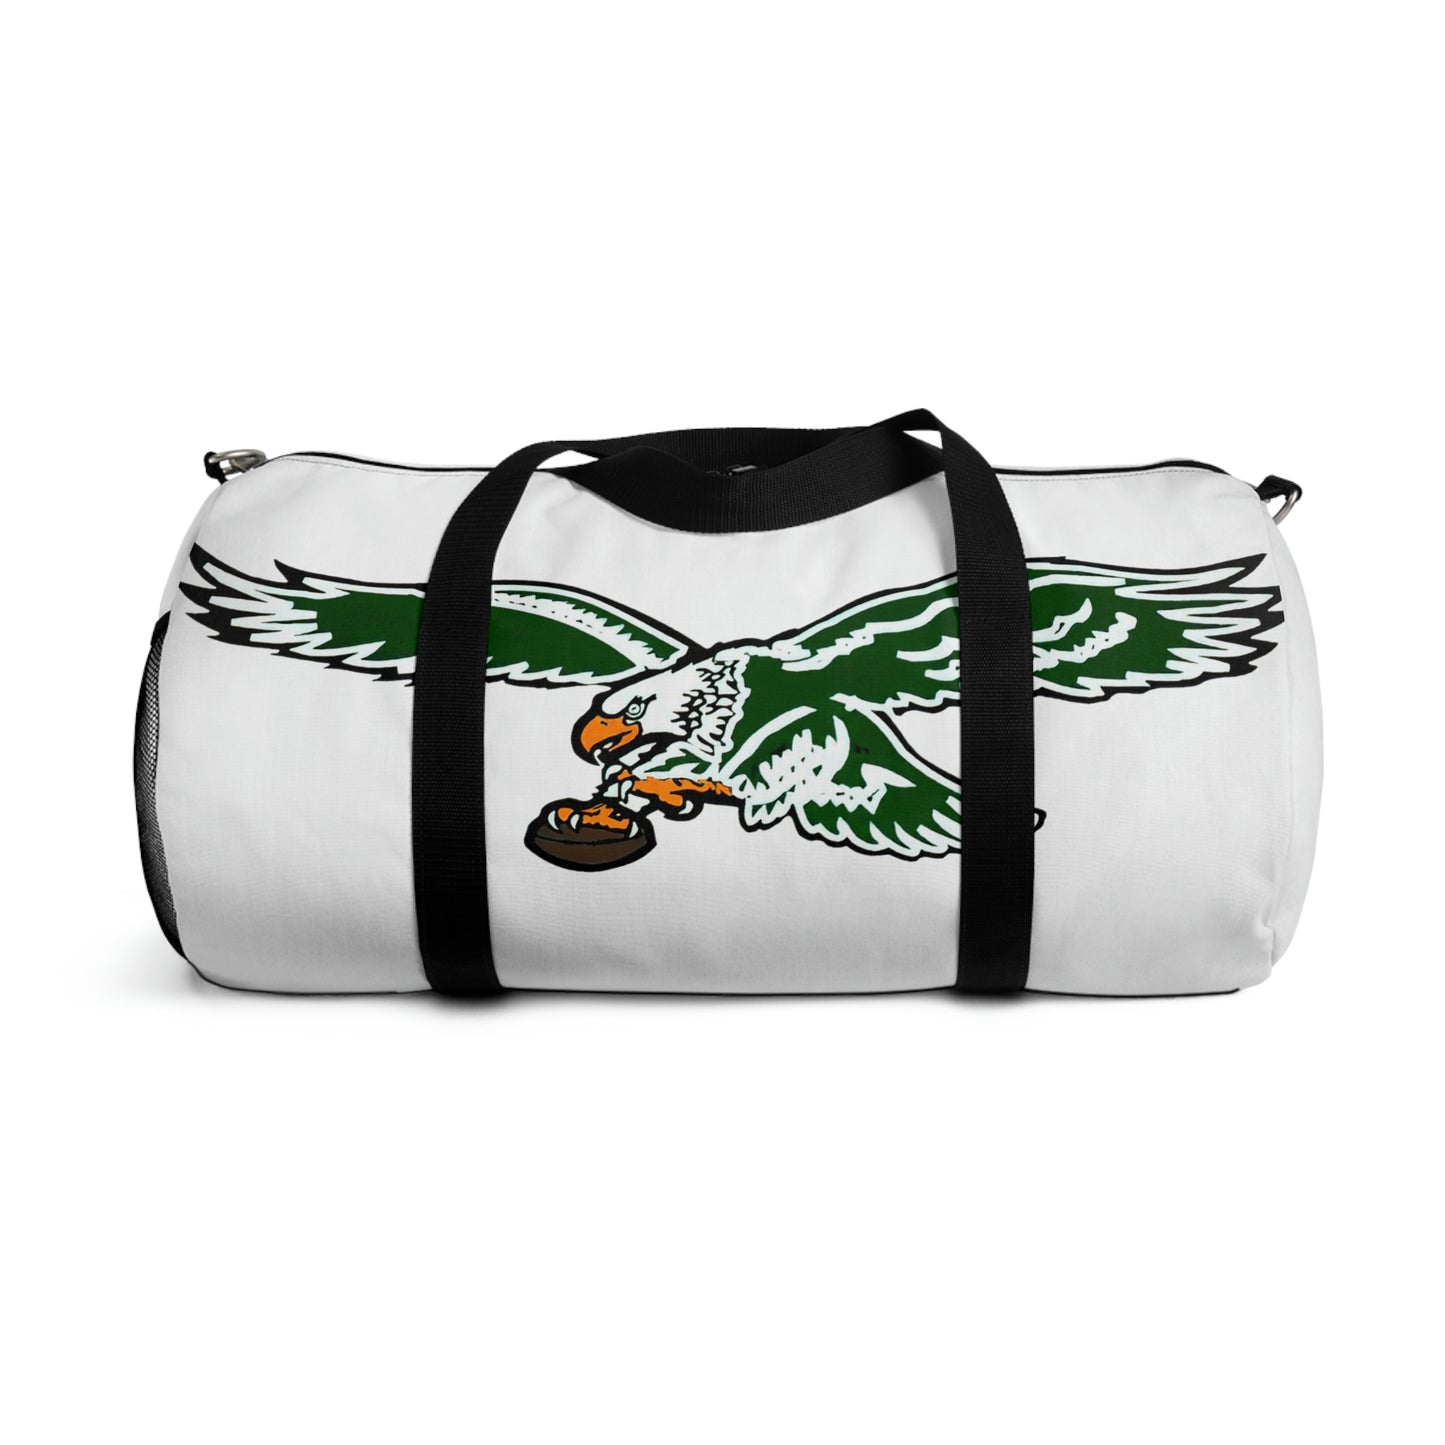 White Retro Philadelphia Eagles Duffel Bag